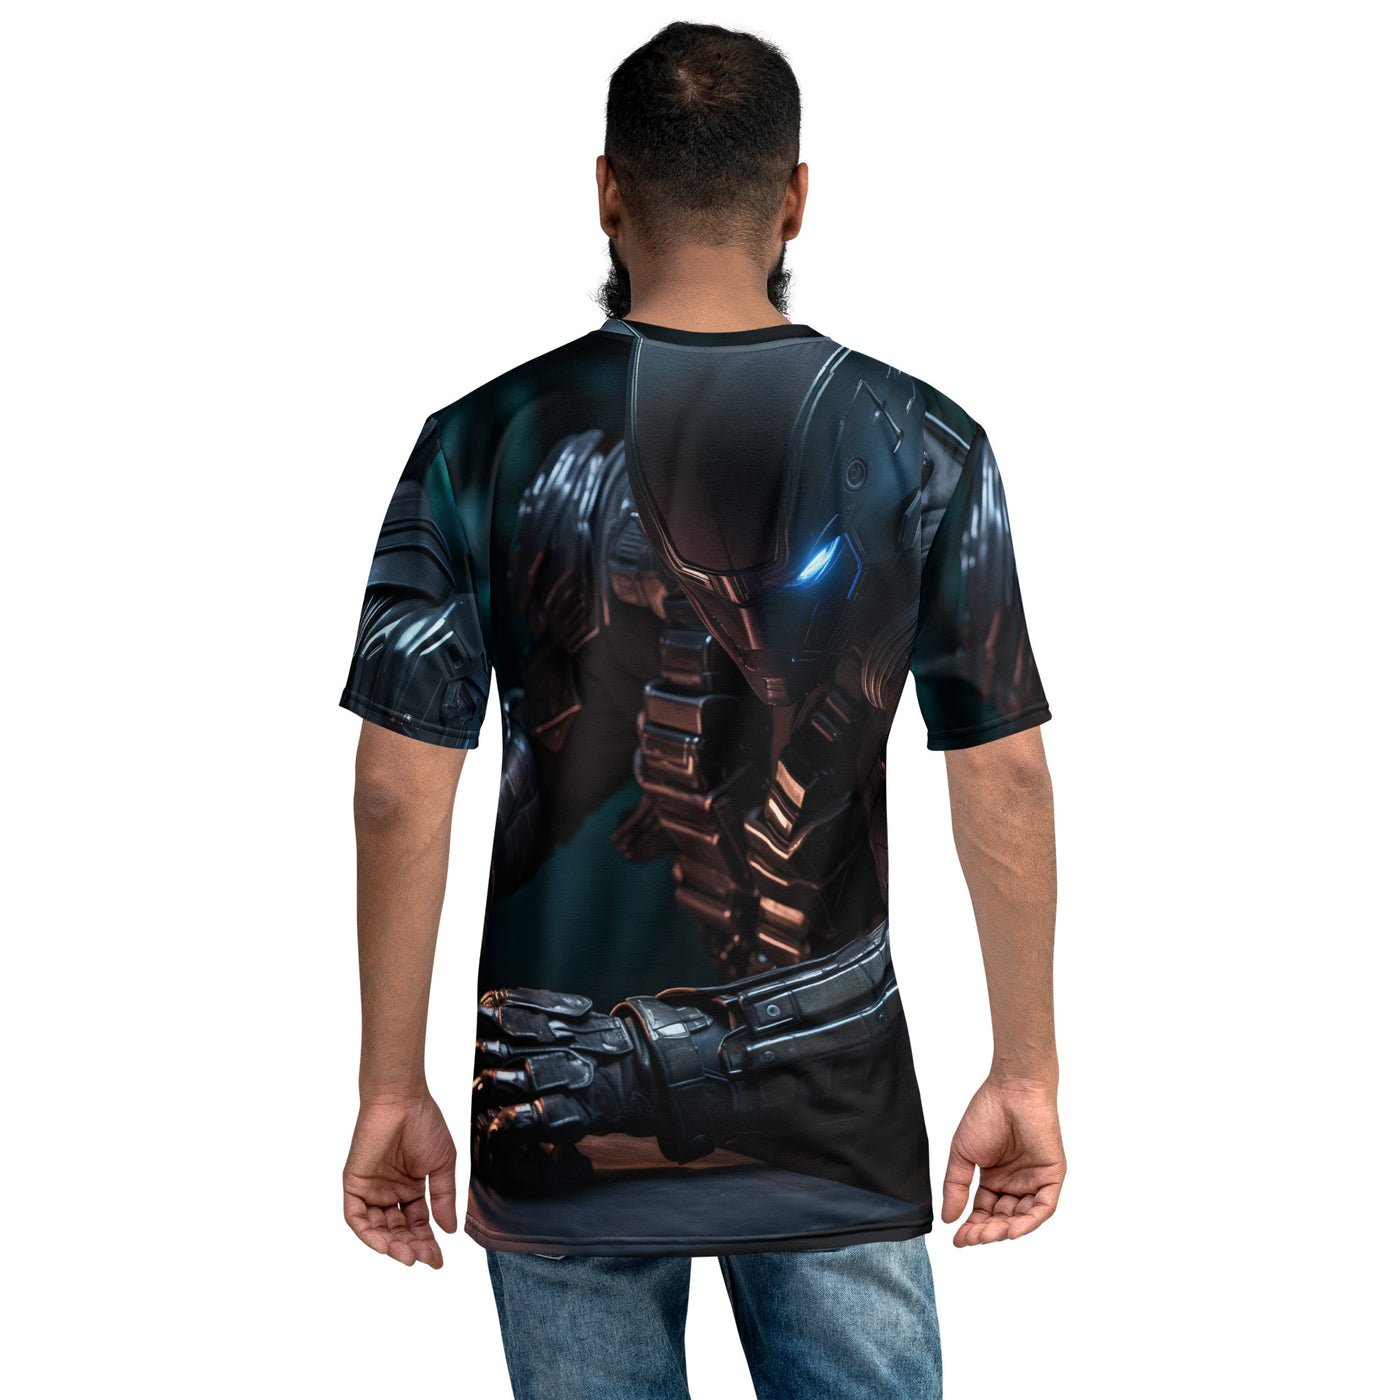 CyberArms Warrior v26 - Men's t-shirt